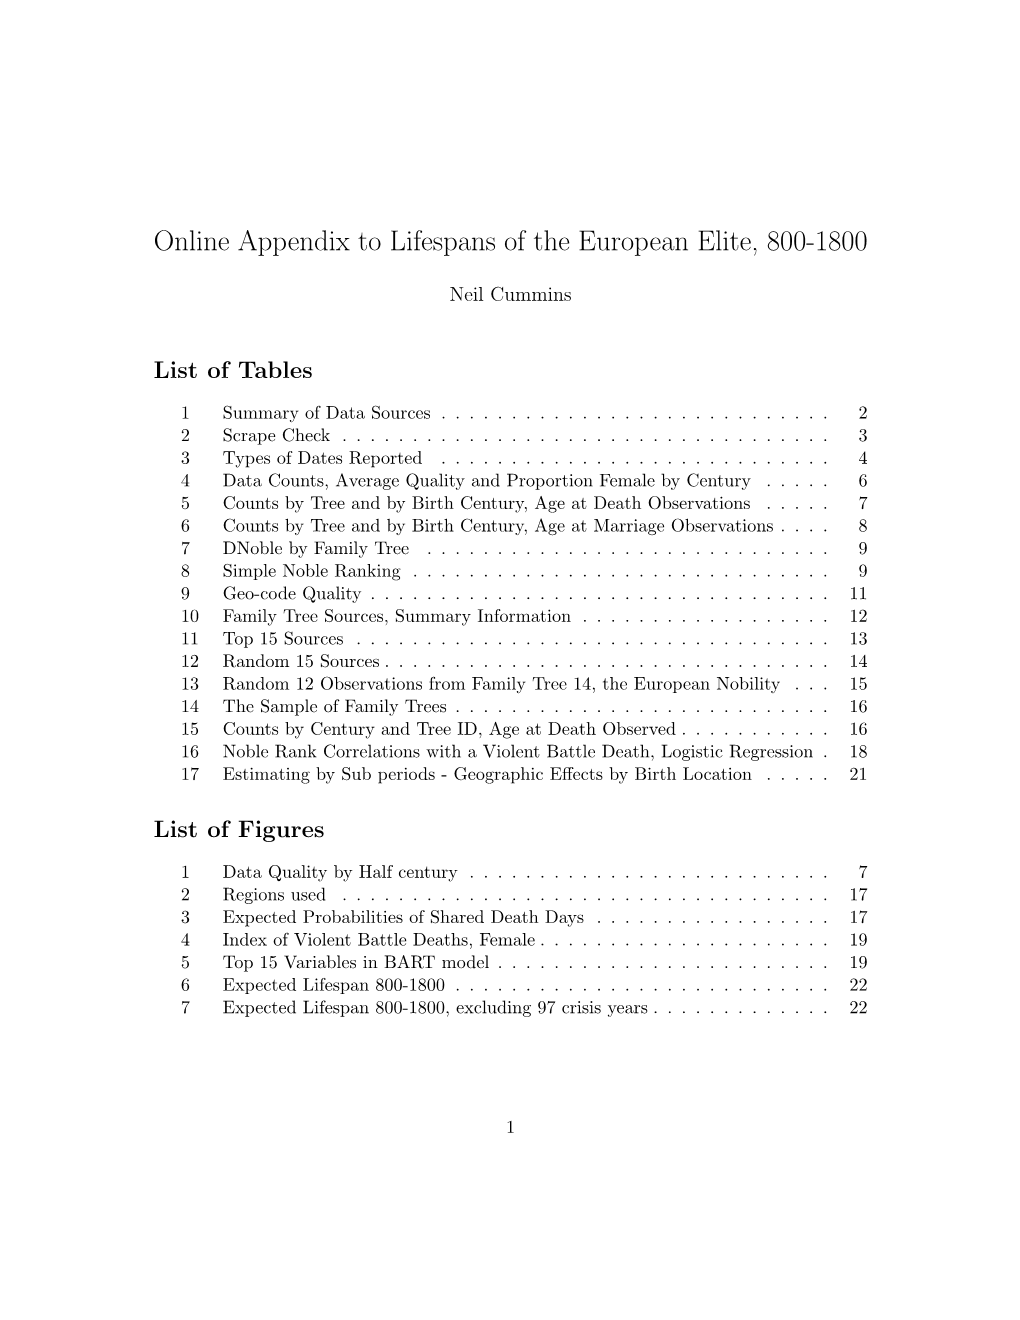 Online Appendix to Lifespans of the European Elite, 800-1800